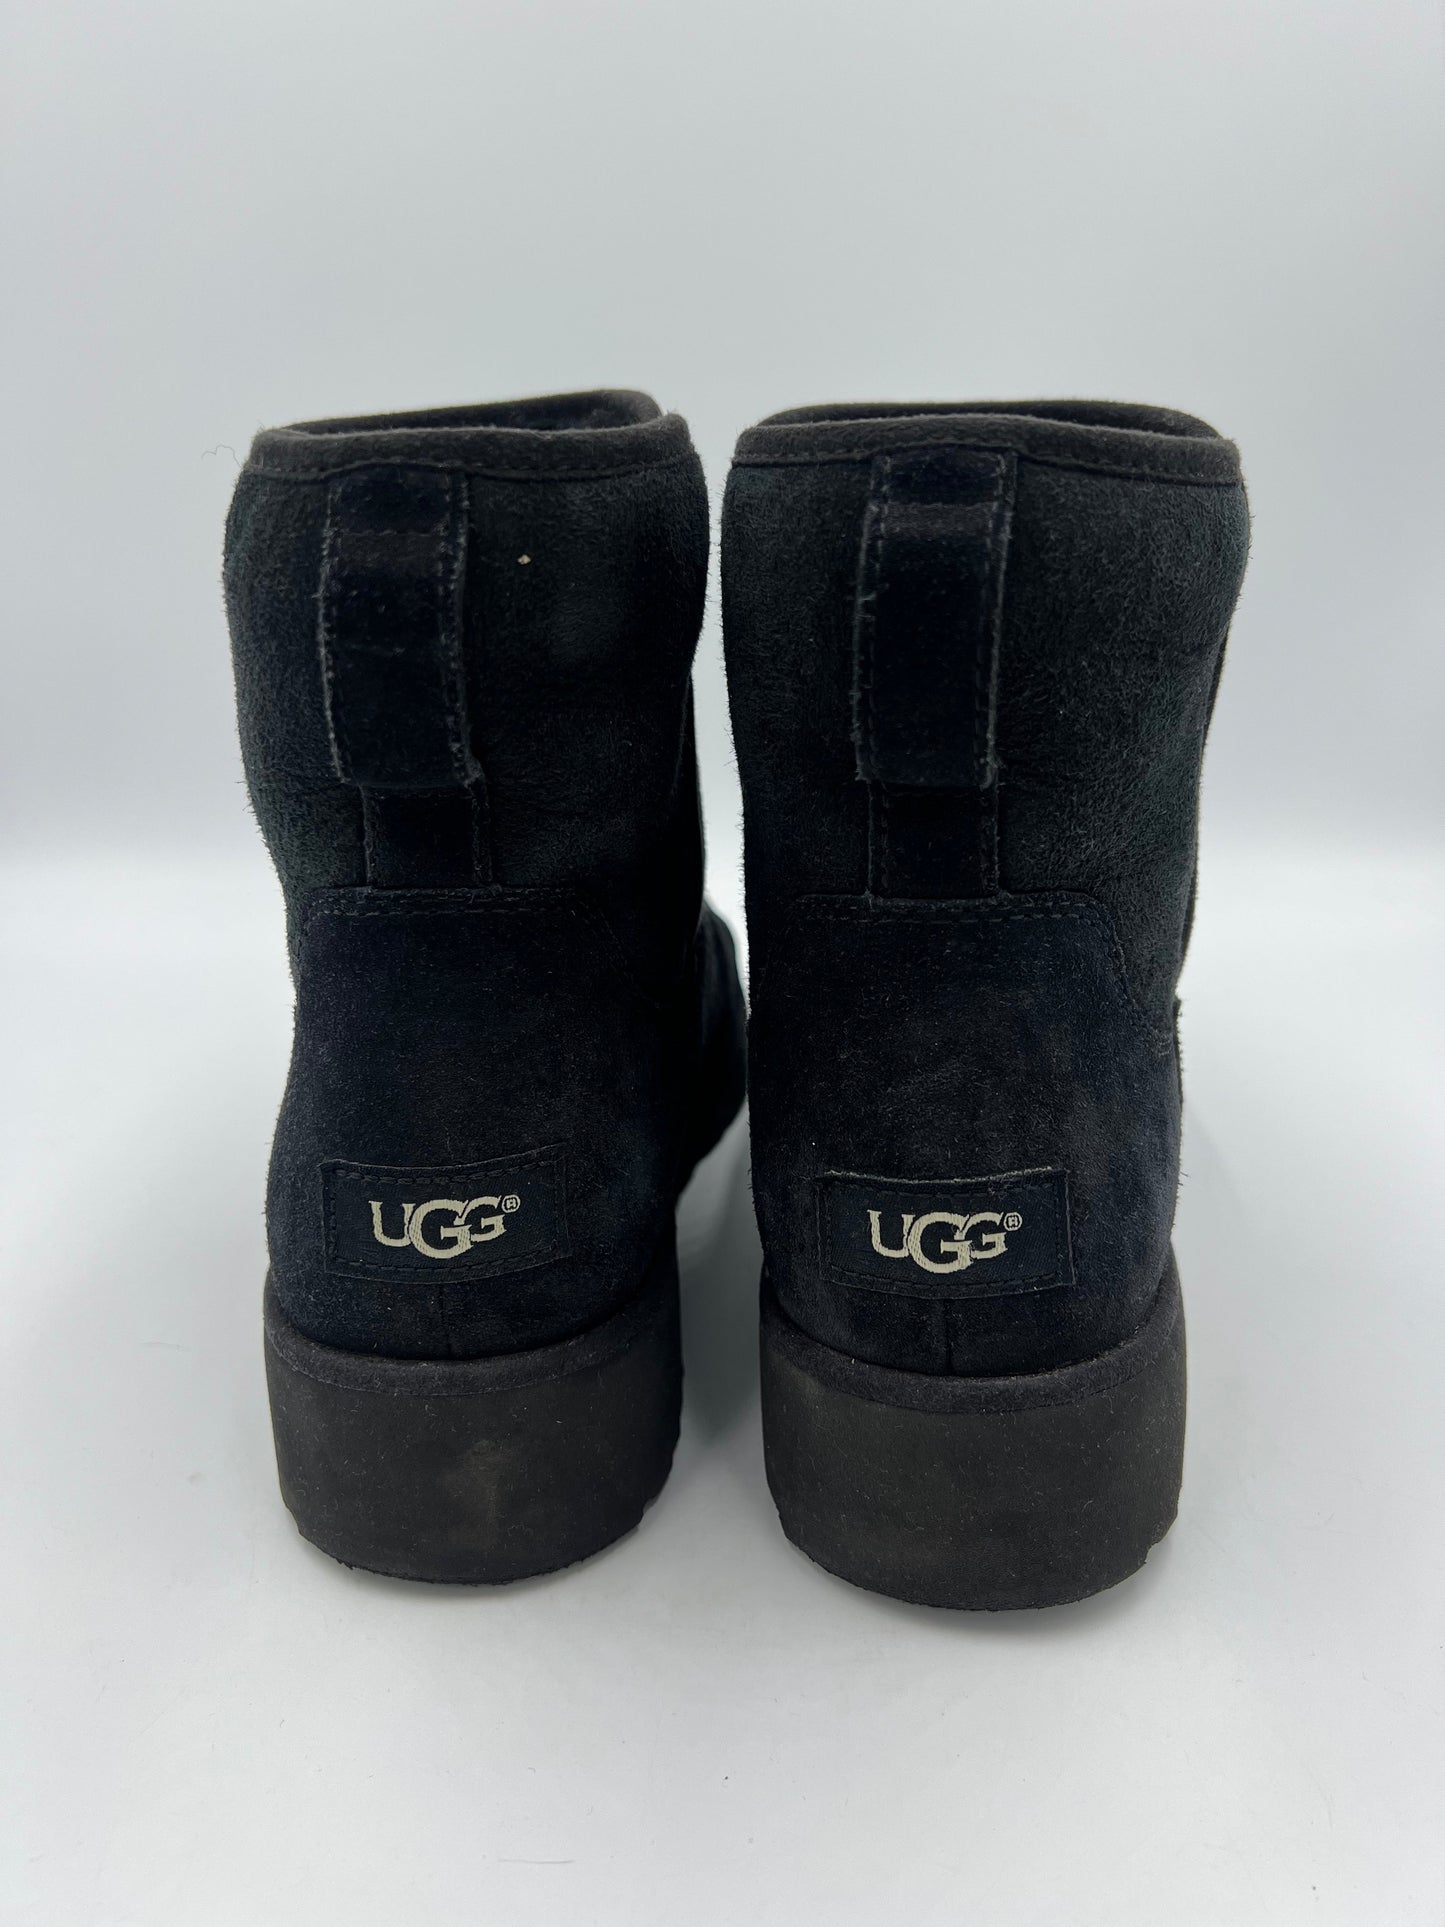 Boots Designer By Ugg  Size: 10